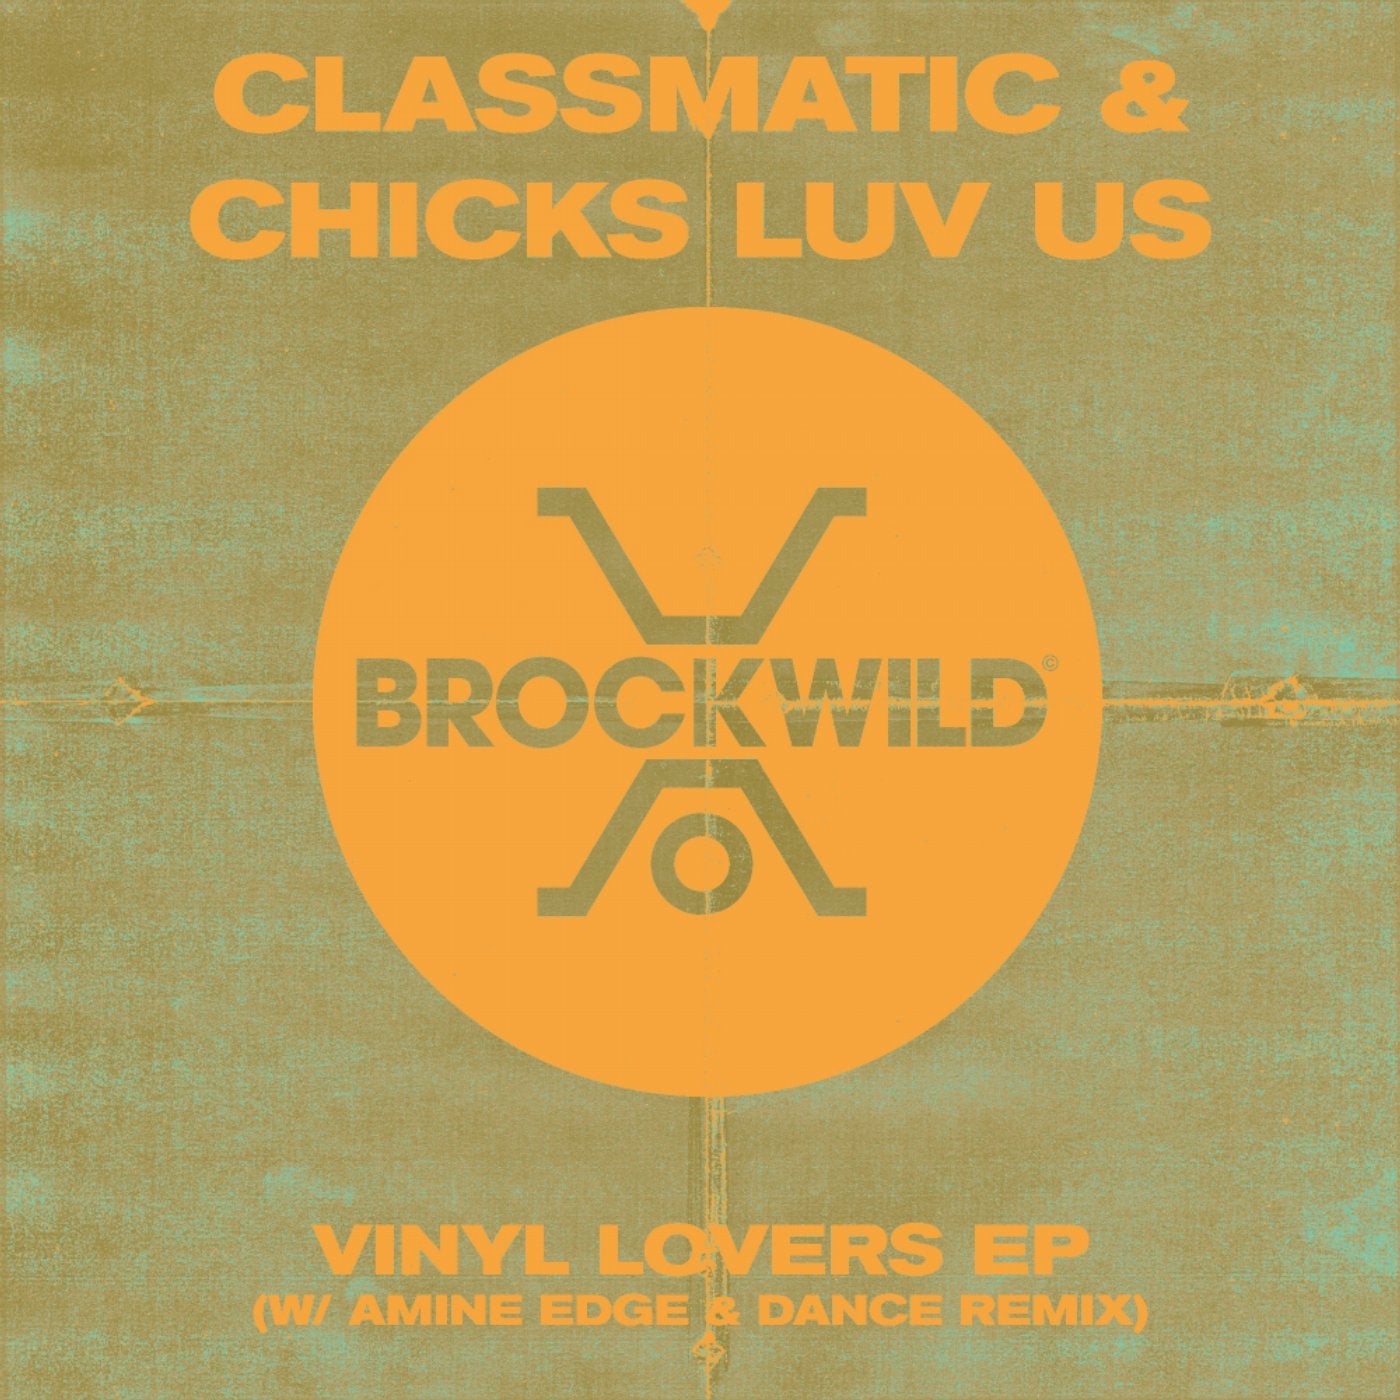 Vinyl Lovers EP